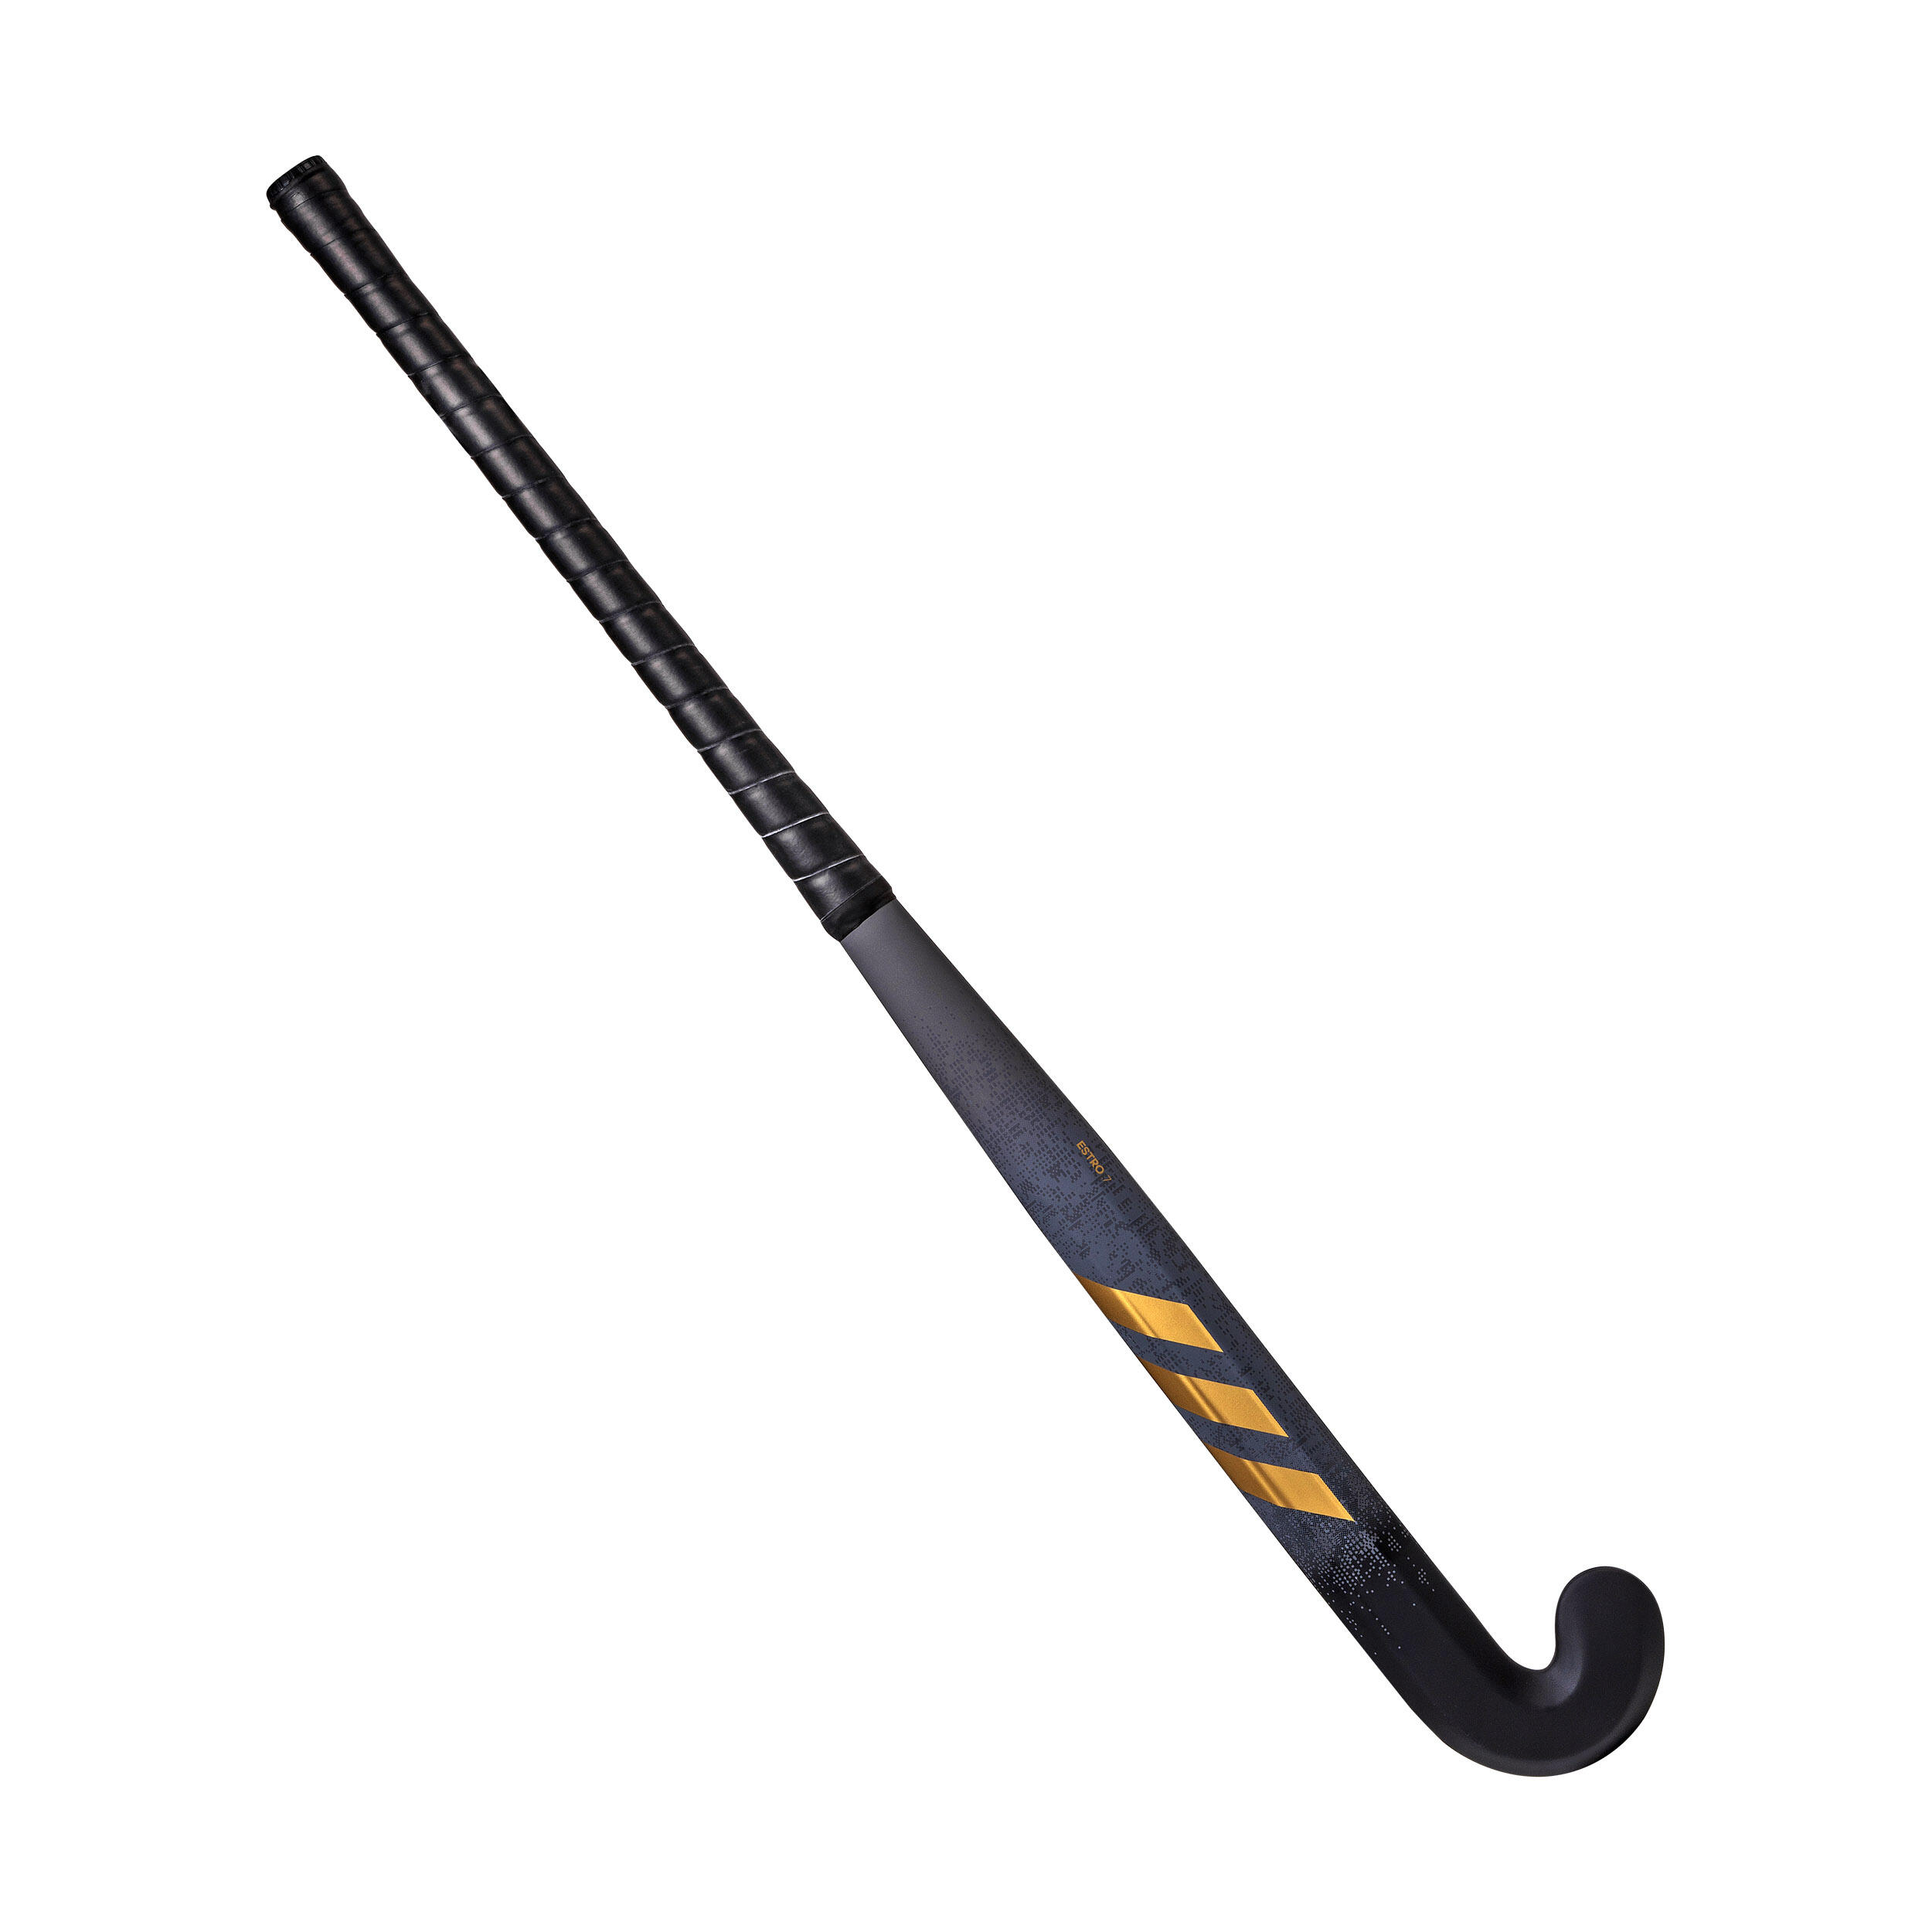 Adult Intermediate 20% Carbon Mid Bow Field Hockey Stick Estro .7 - Black/GoldBlack and gold 12/13